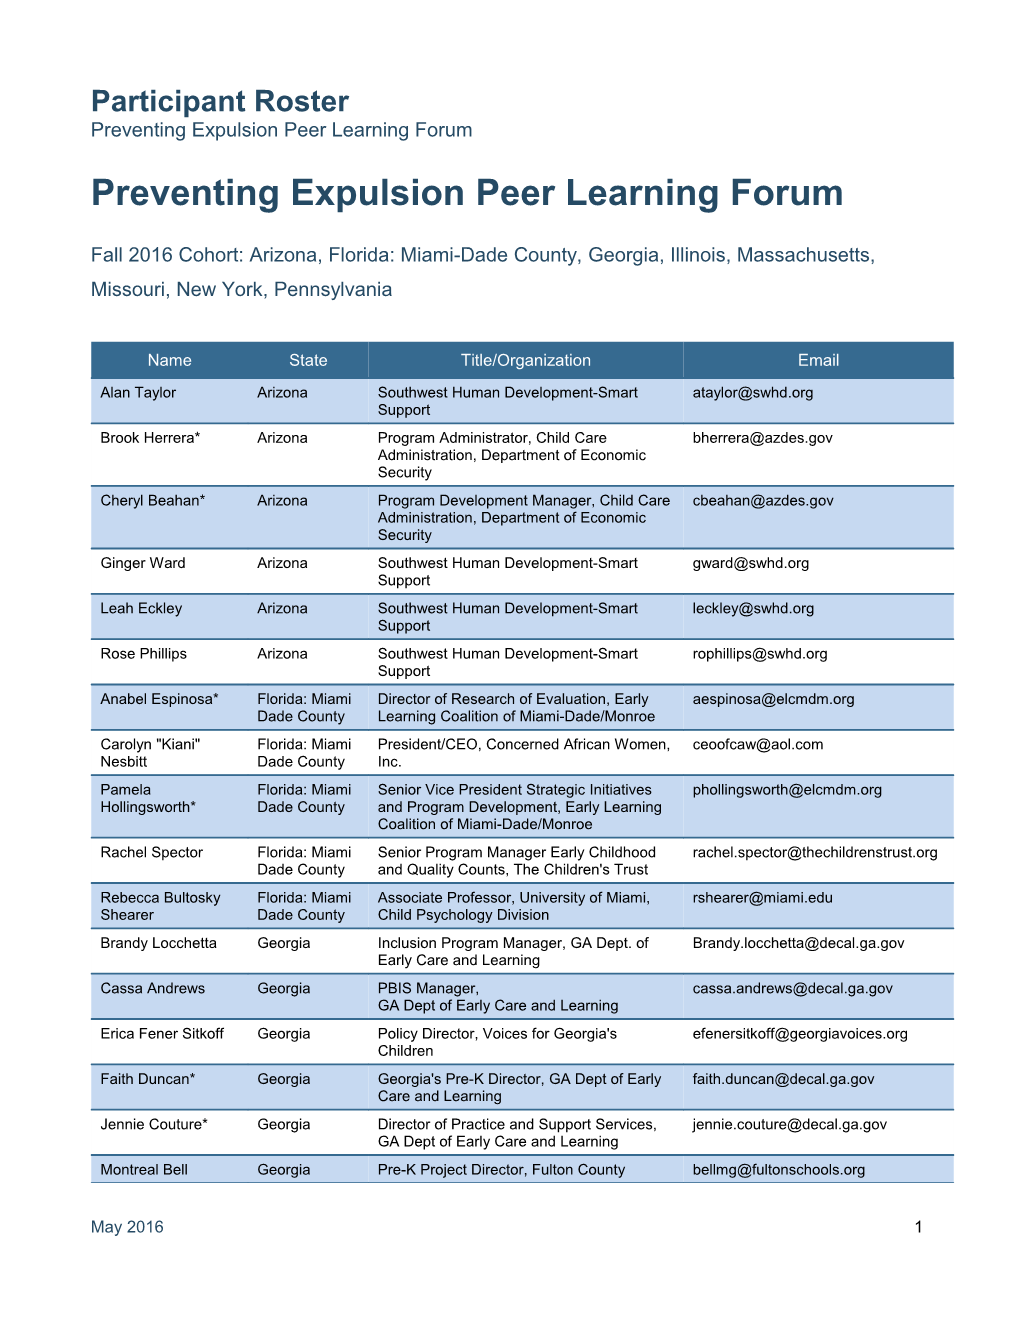 Preventing Expulsion Peer Learning Forum